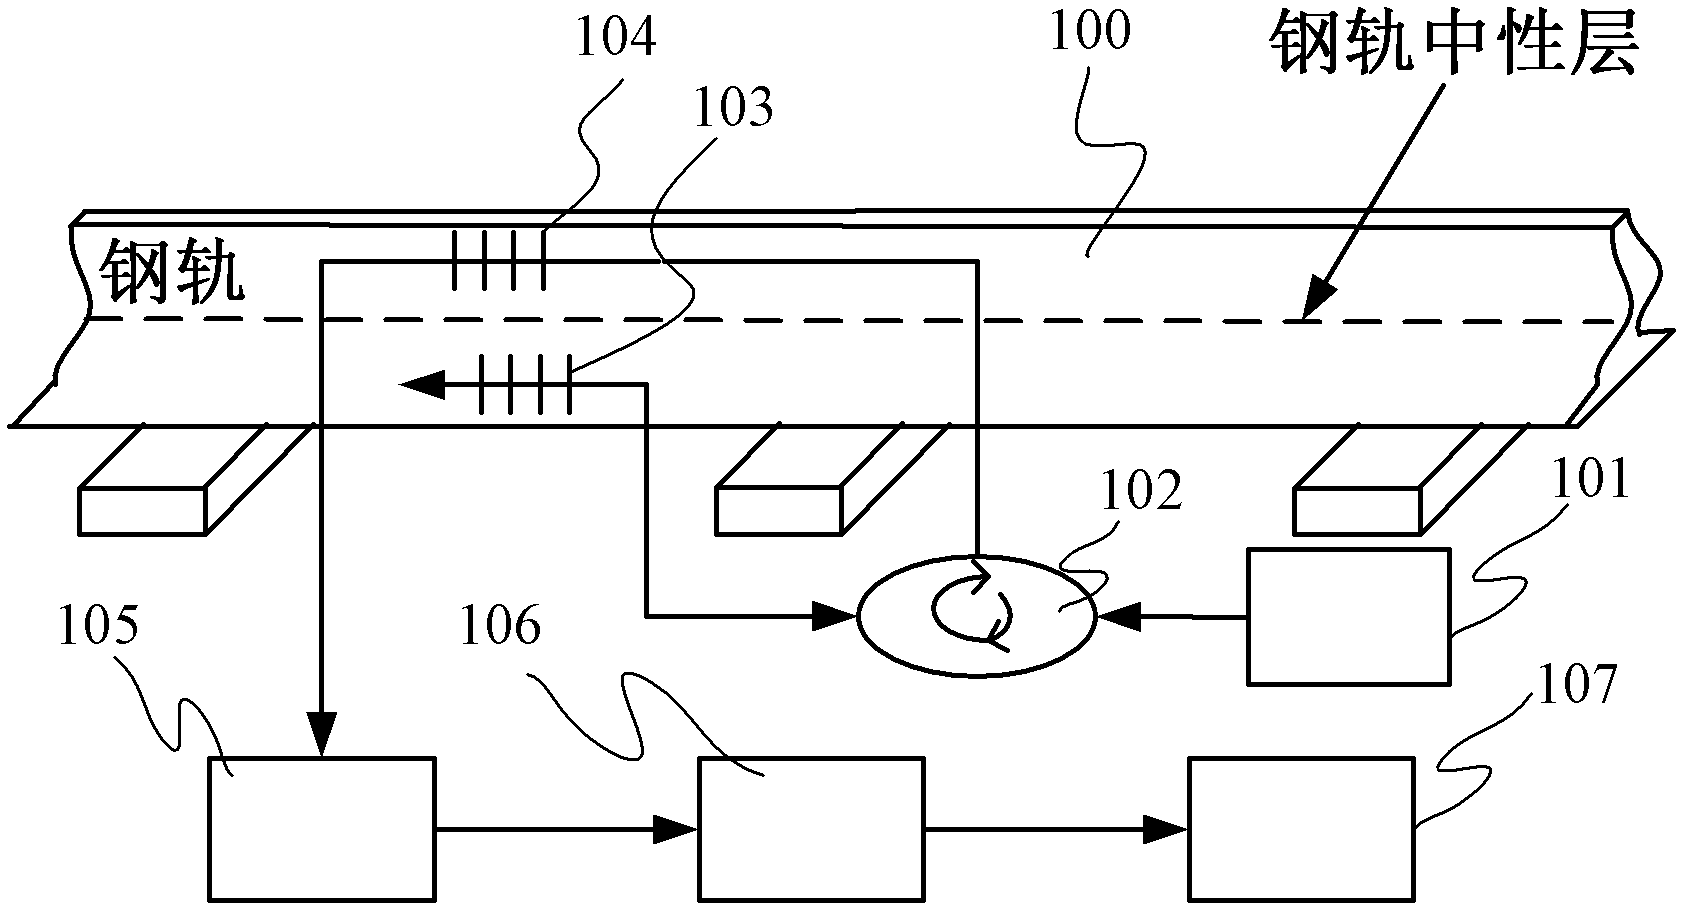 Rail straining and sensing method based on bidirectional strain matching fiber grating demodulating technique